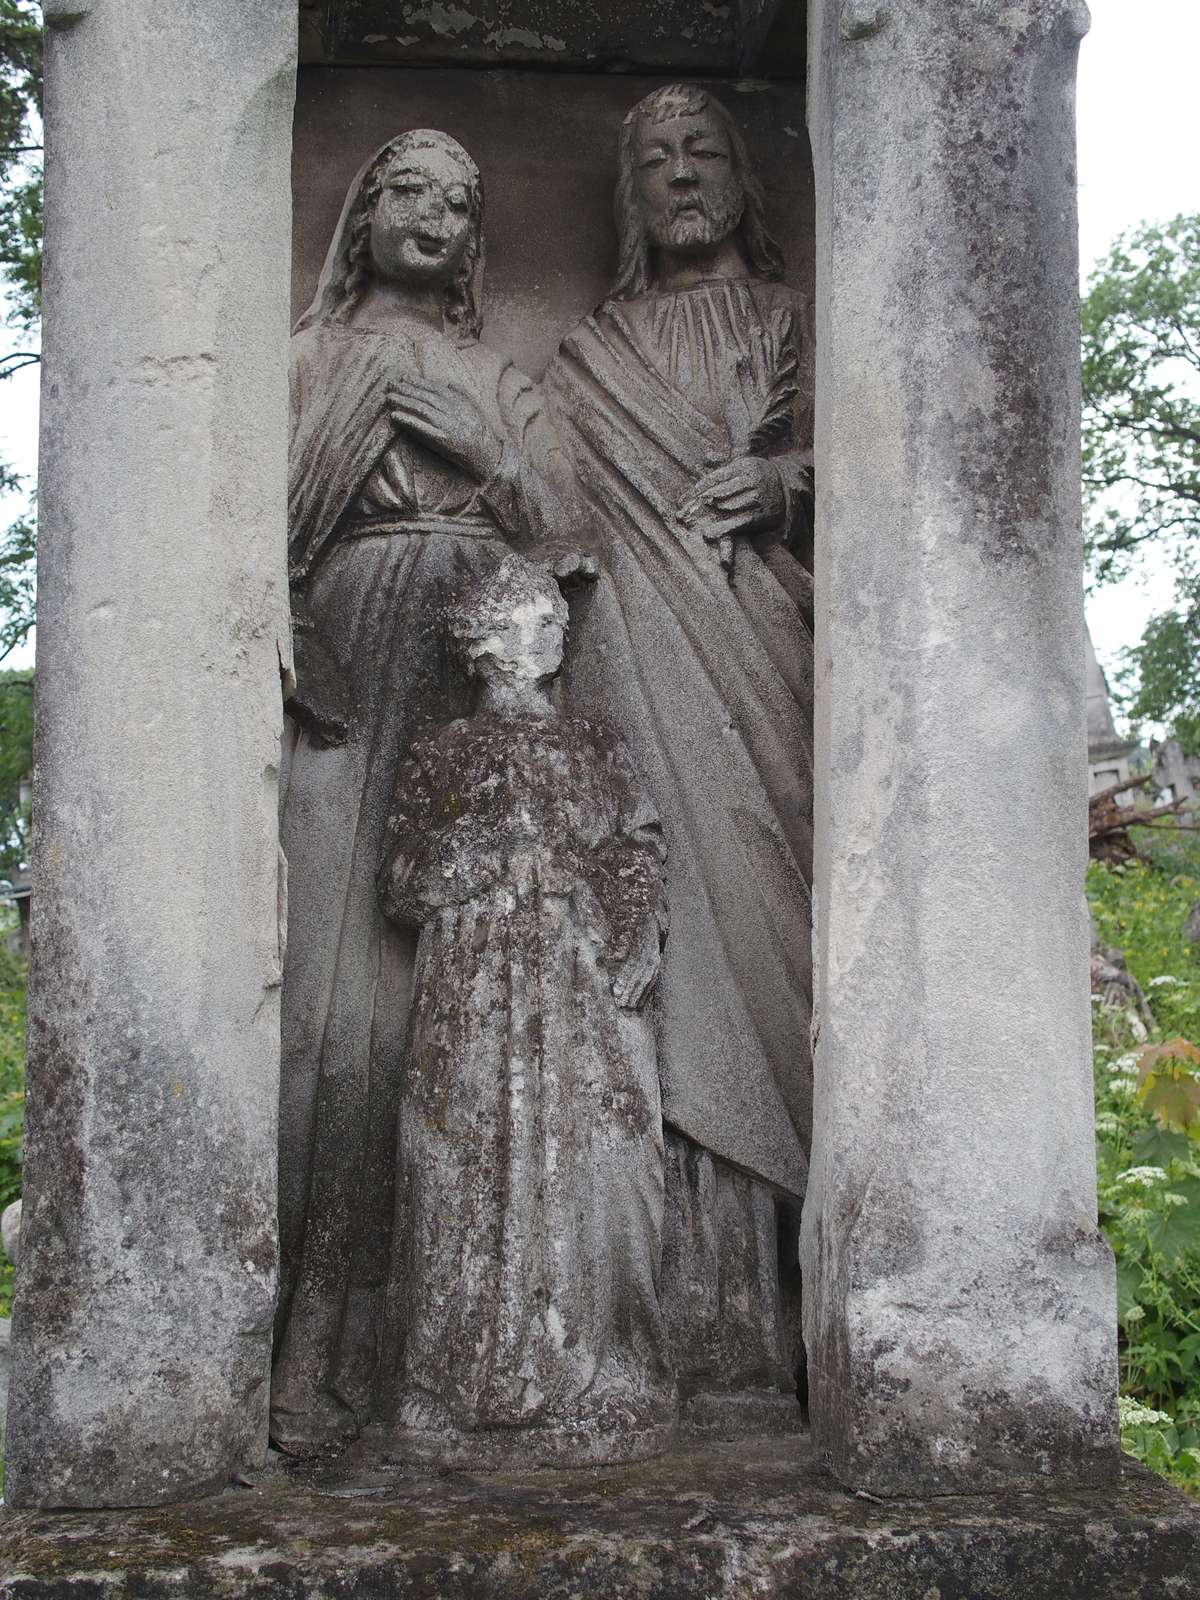 Tombstone of Franciszka Dynowska, Zbarazh cemetery, as of 2018.